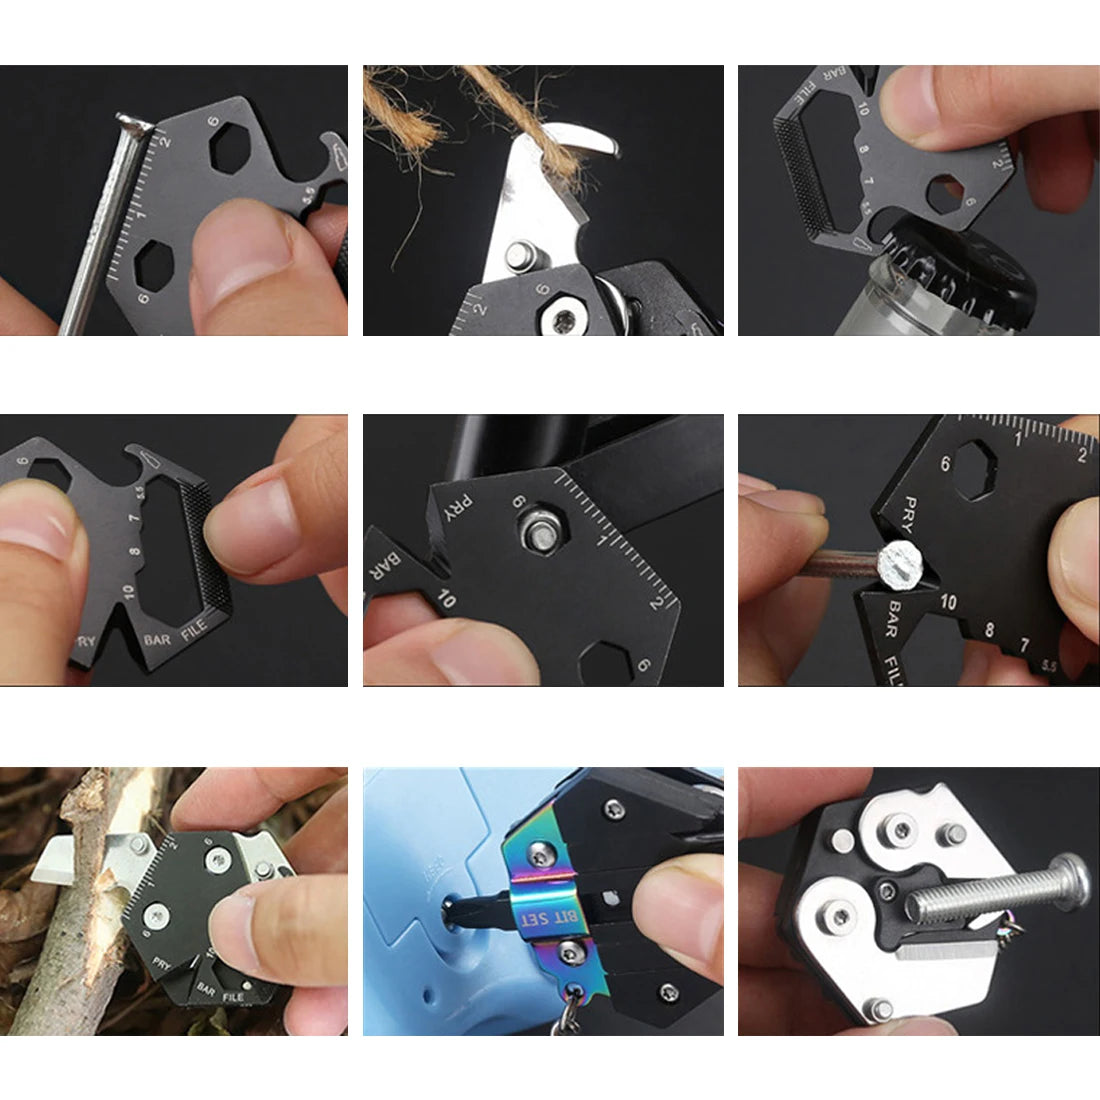 Multitool Keychain Hexagonal Kit Folding Mini Pocket Survival Tool Set Stainless Steel, Gift to Father, Husband